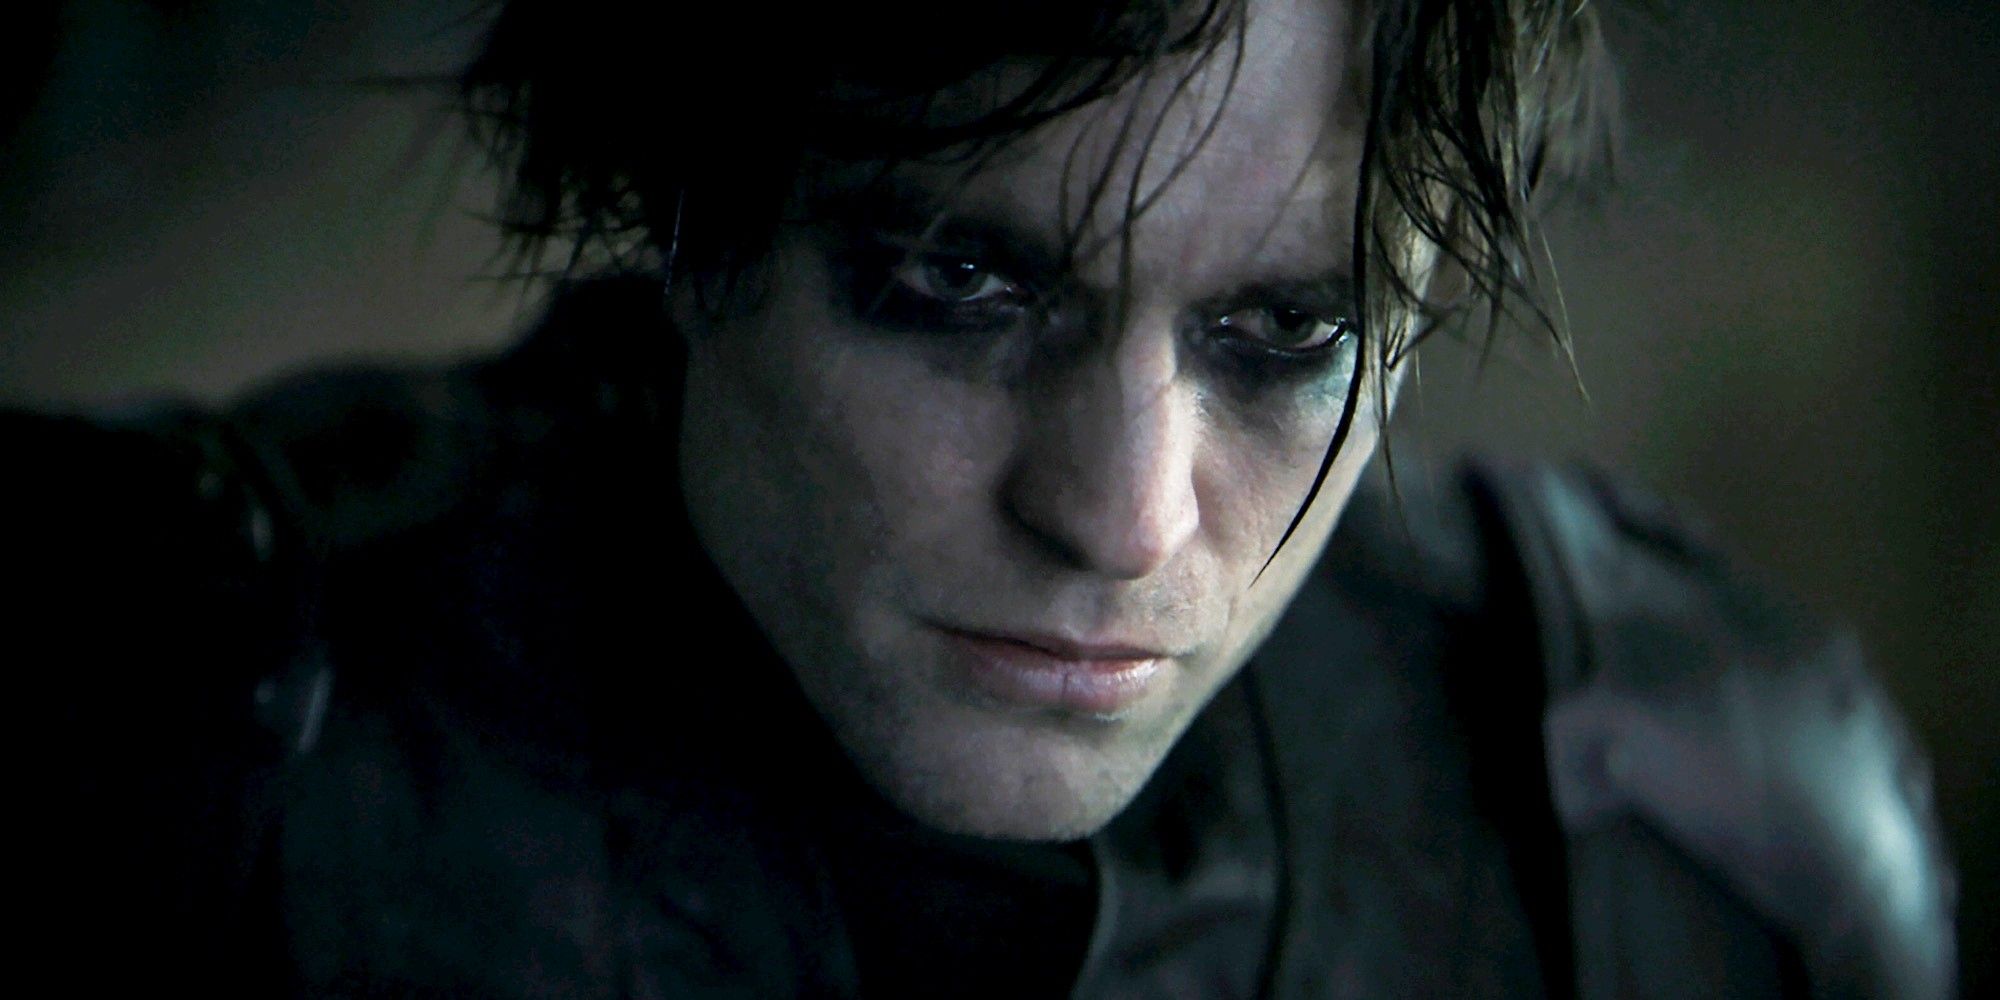 Robert Pattinson The Batman Casting Backlash Explained By Director